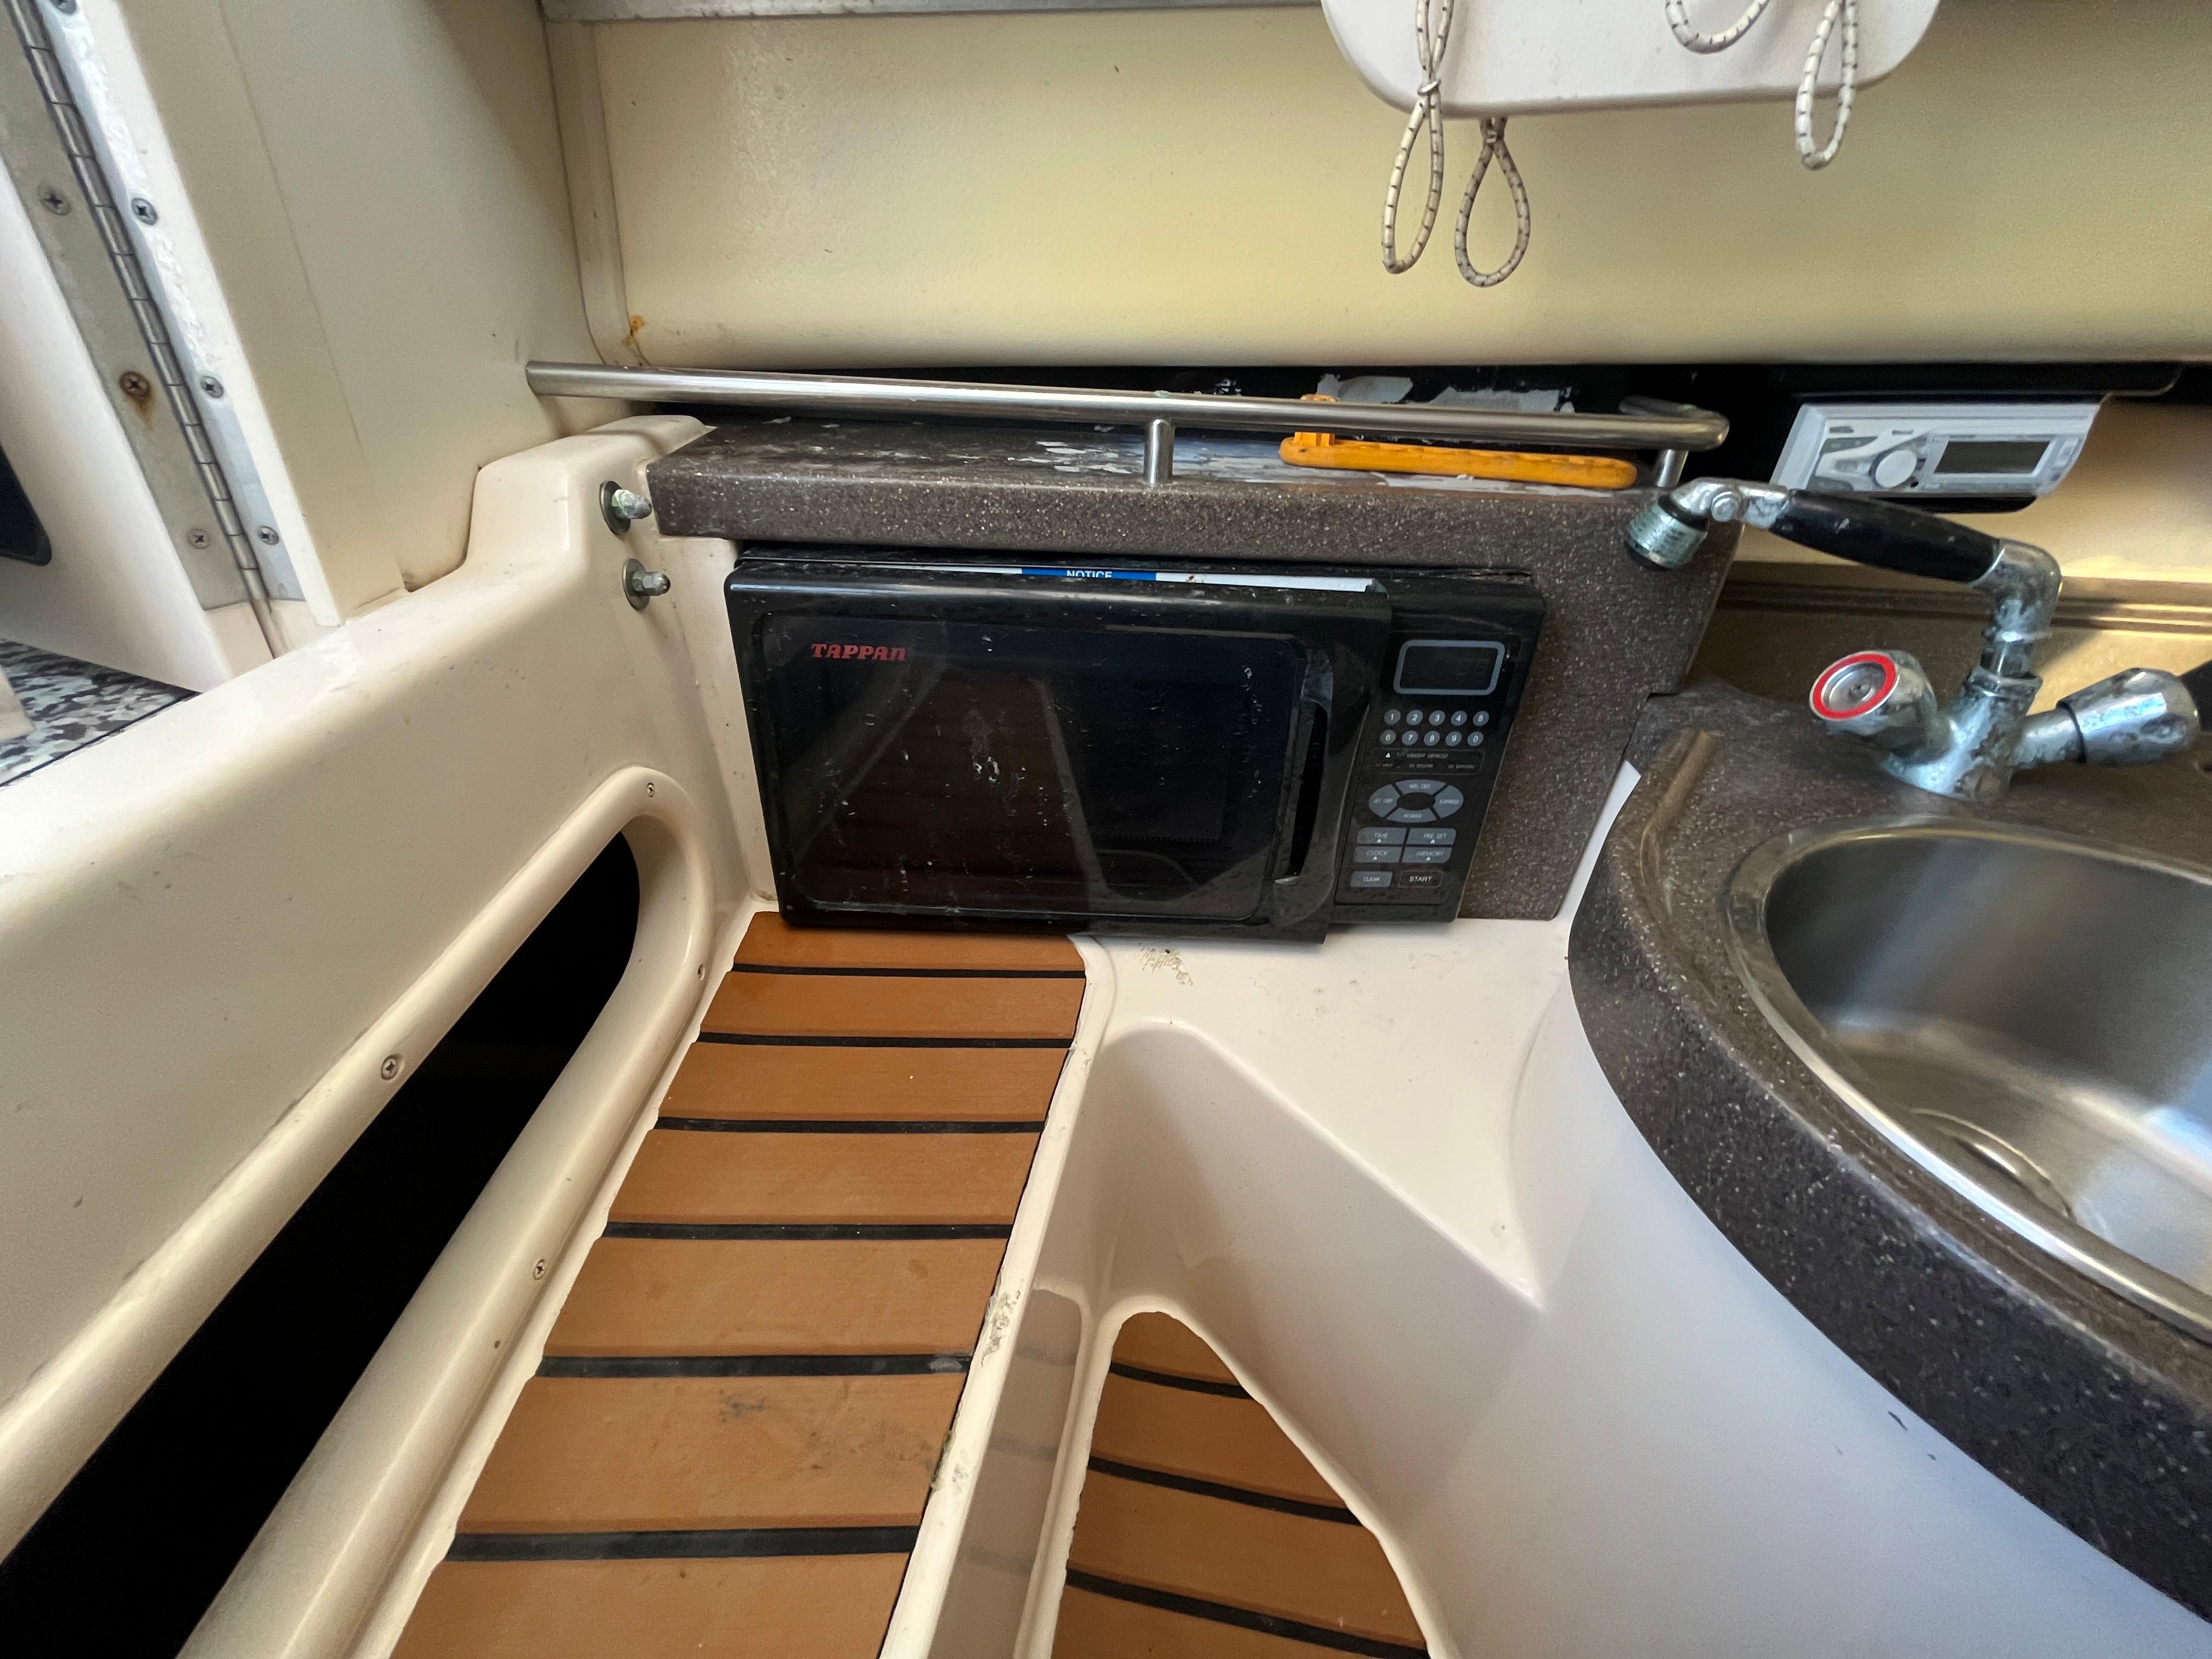 Grady-White 282 Sailfish, Tappan Microwave oven